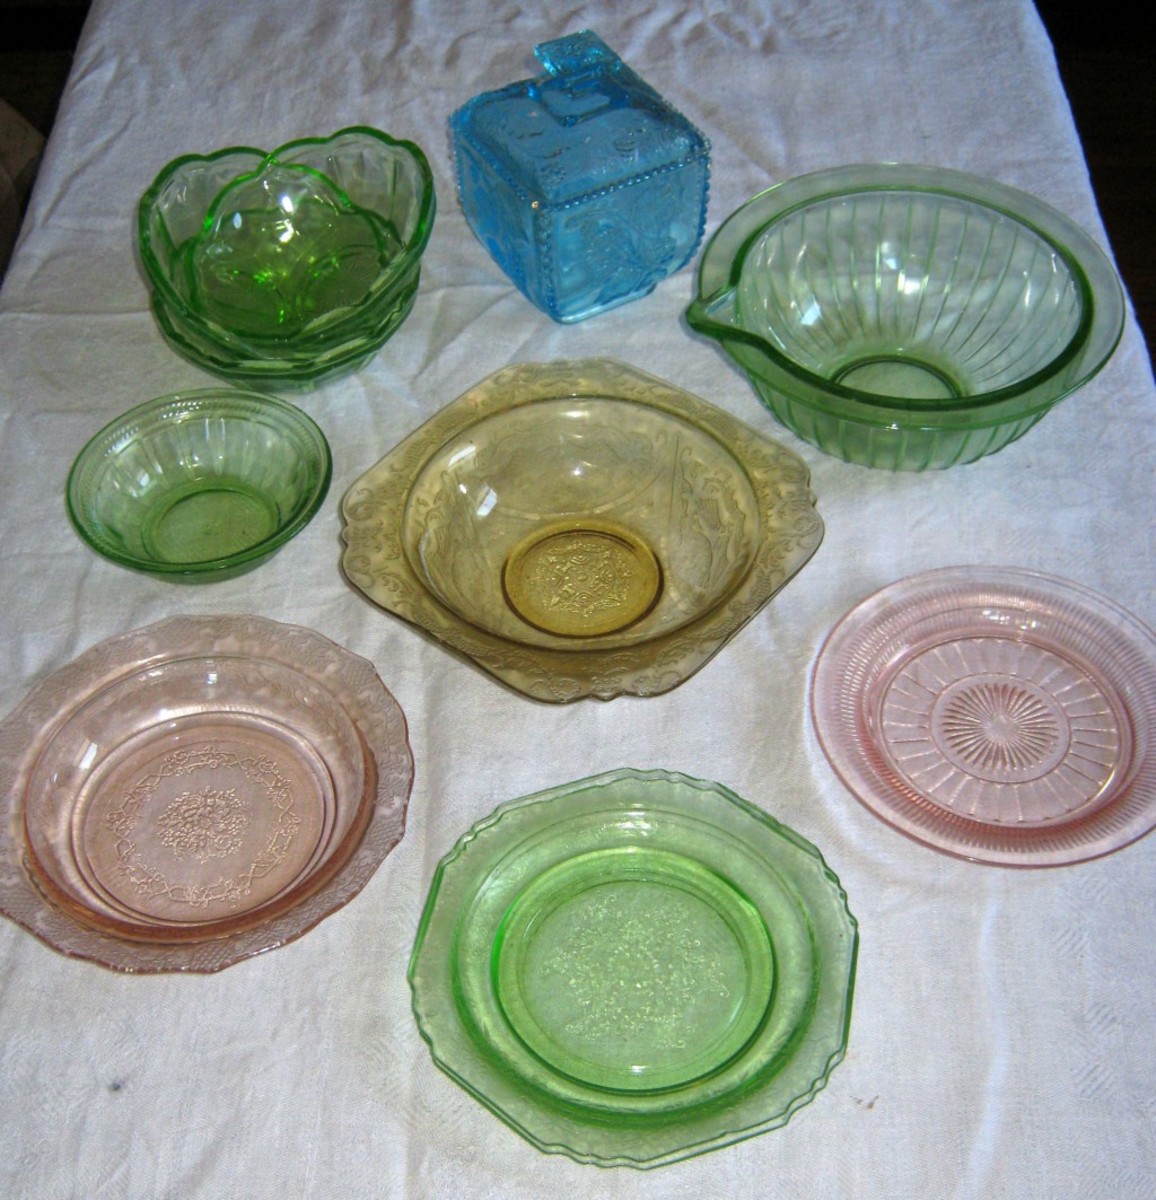 Beautiful Serving Platter Made of Vintage Glassware